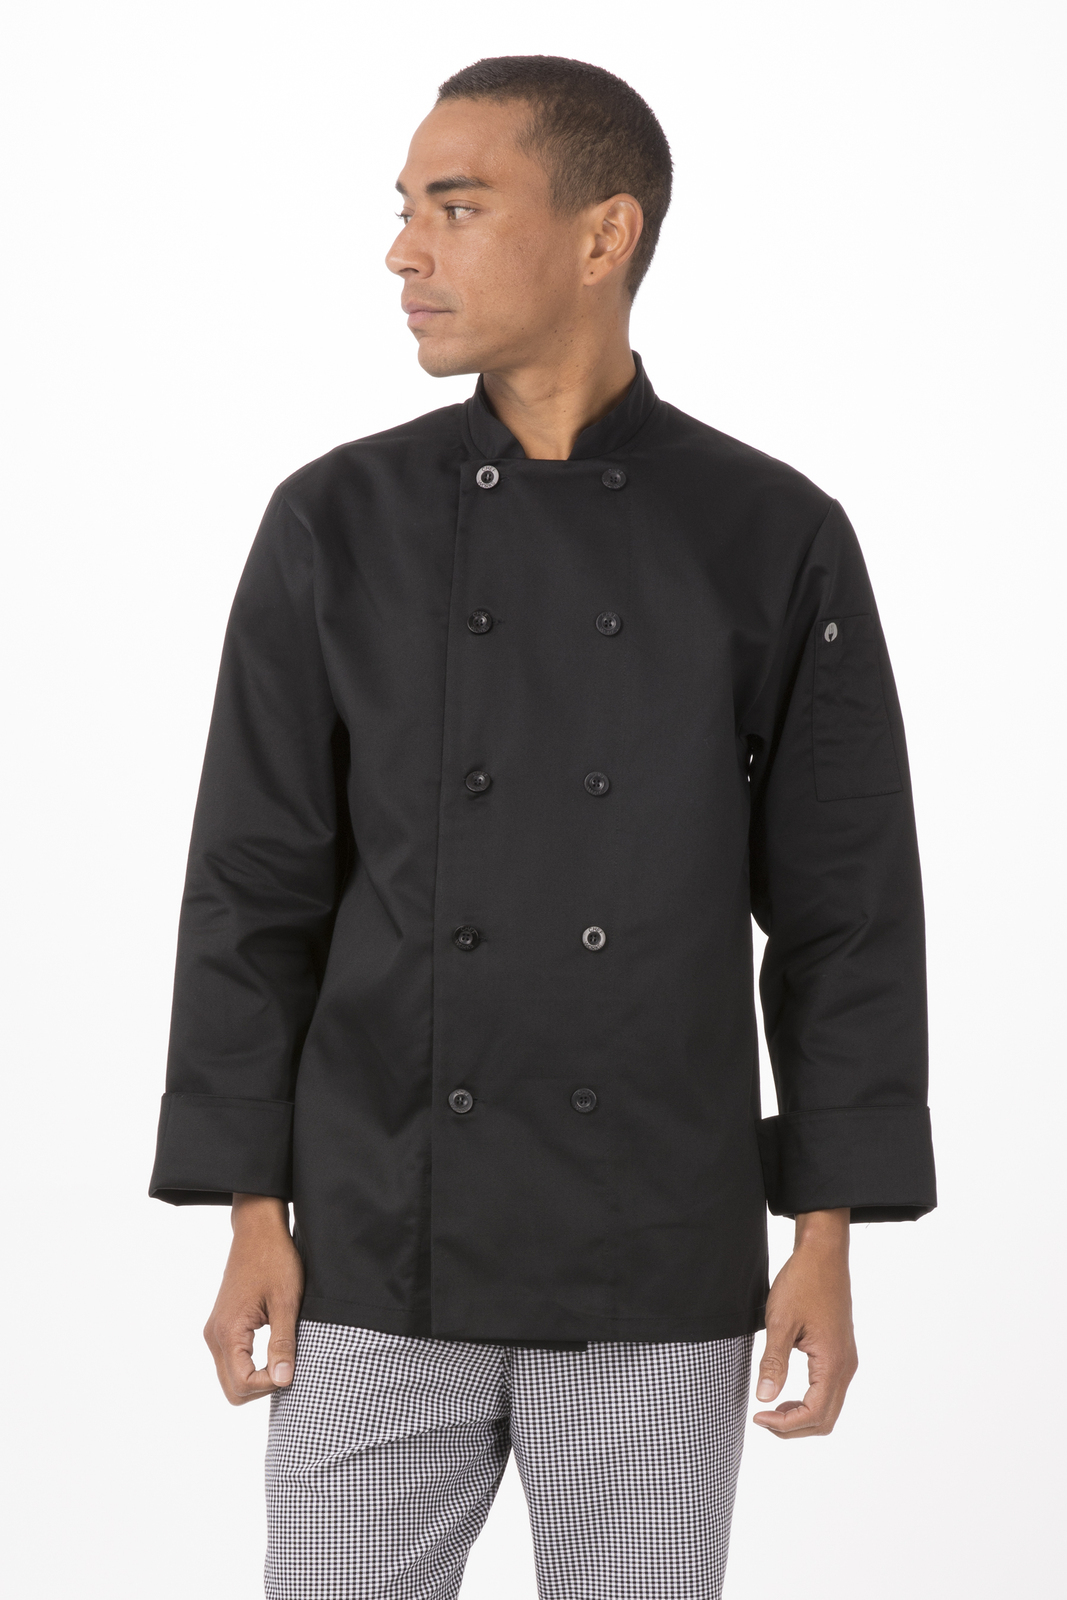 Chef Works Bastille Black Basic Chef Jacket